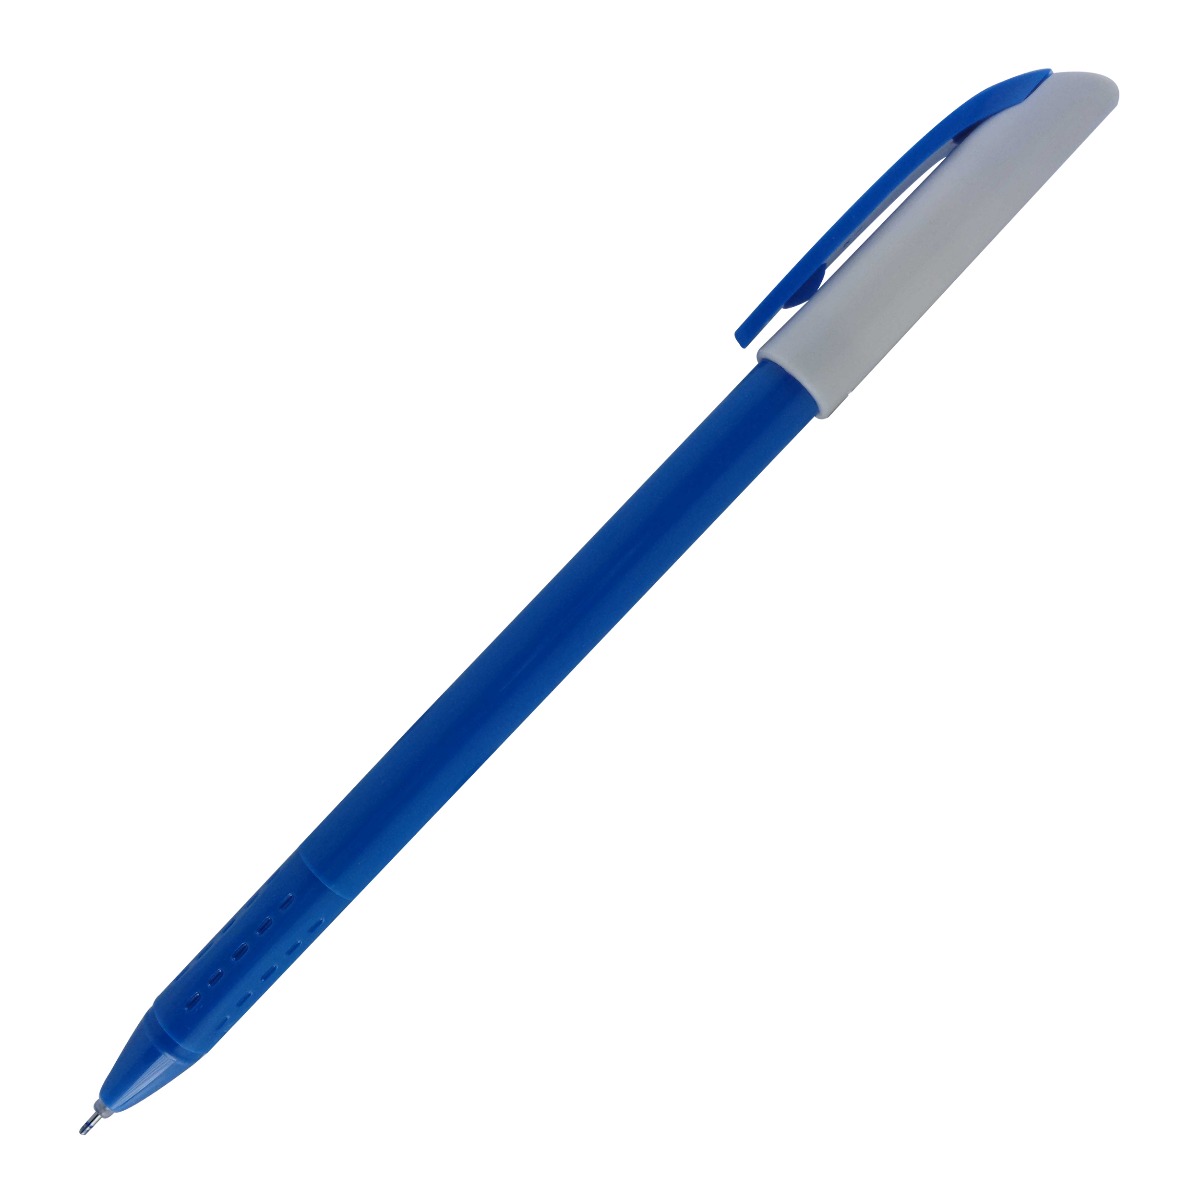 Cello Model: 14898 Deco Gel Blue color body with white cap Blue ink fine tip cap type gel pen